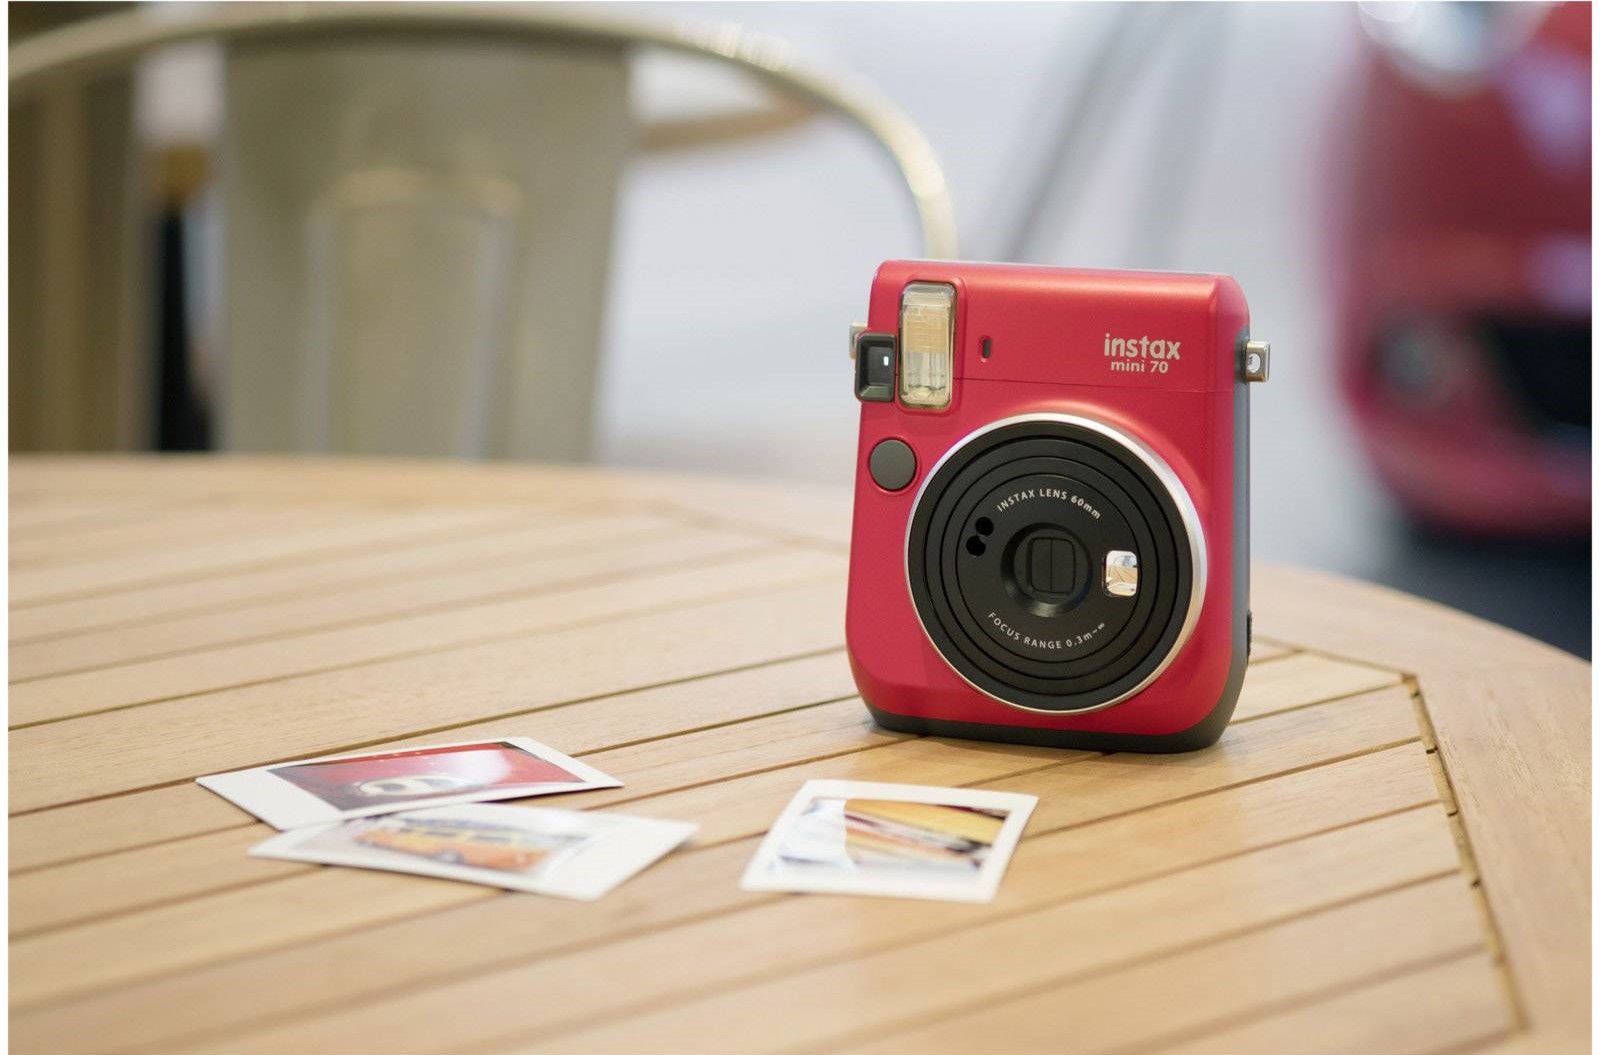  Instant camera Fujifilm instax mini 70 red